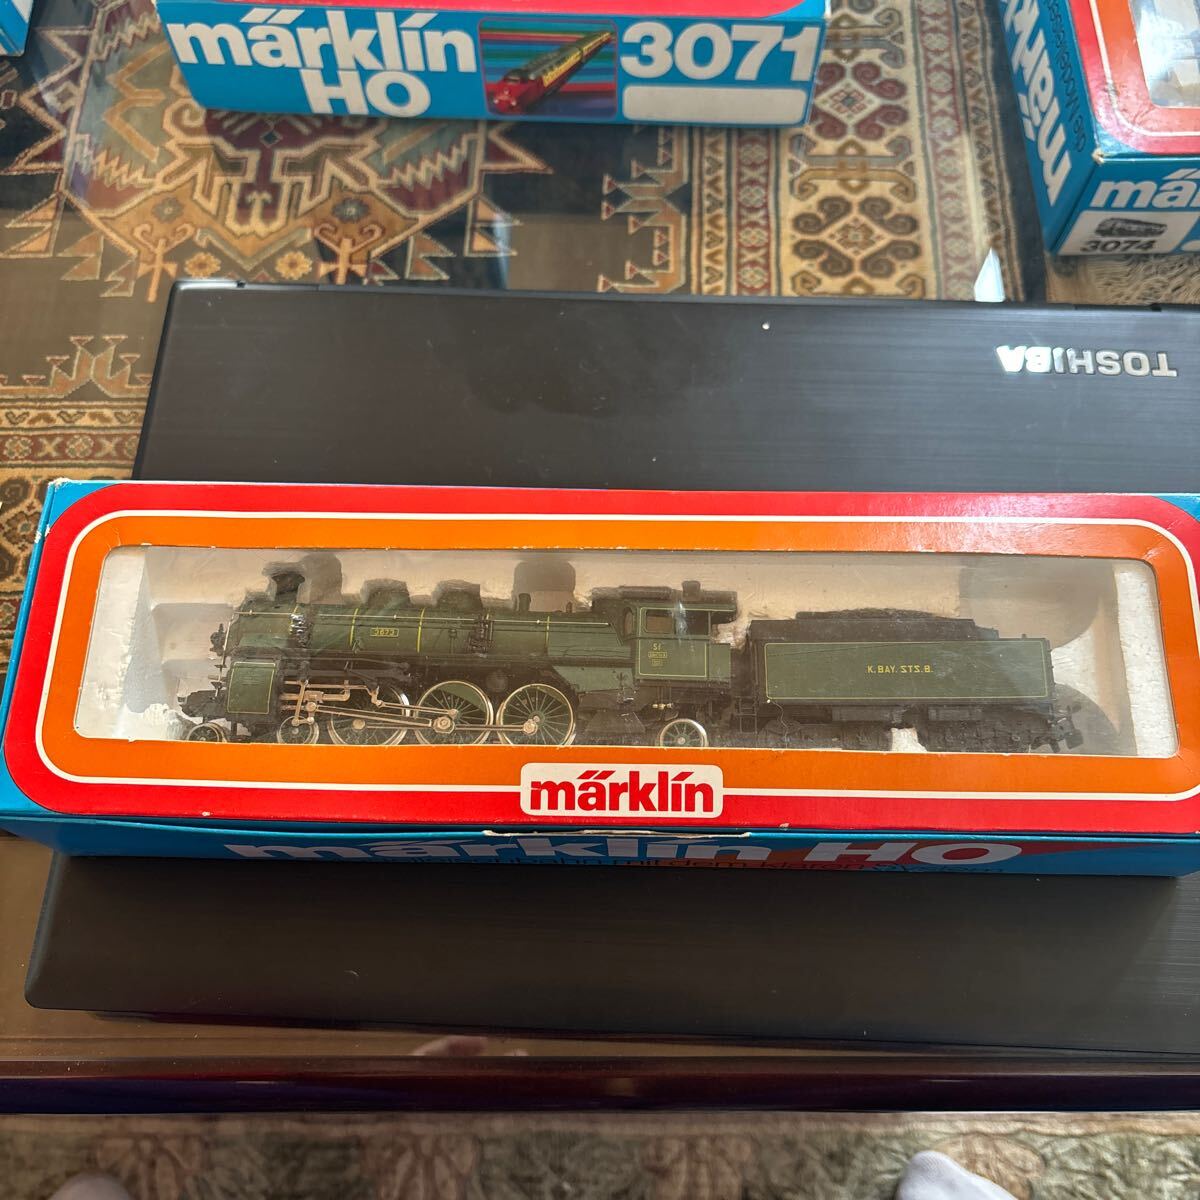 meruk Lynn HO gauge railroad model steam locomotiv Marklin 3092 present condition goods 